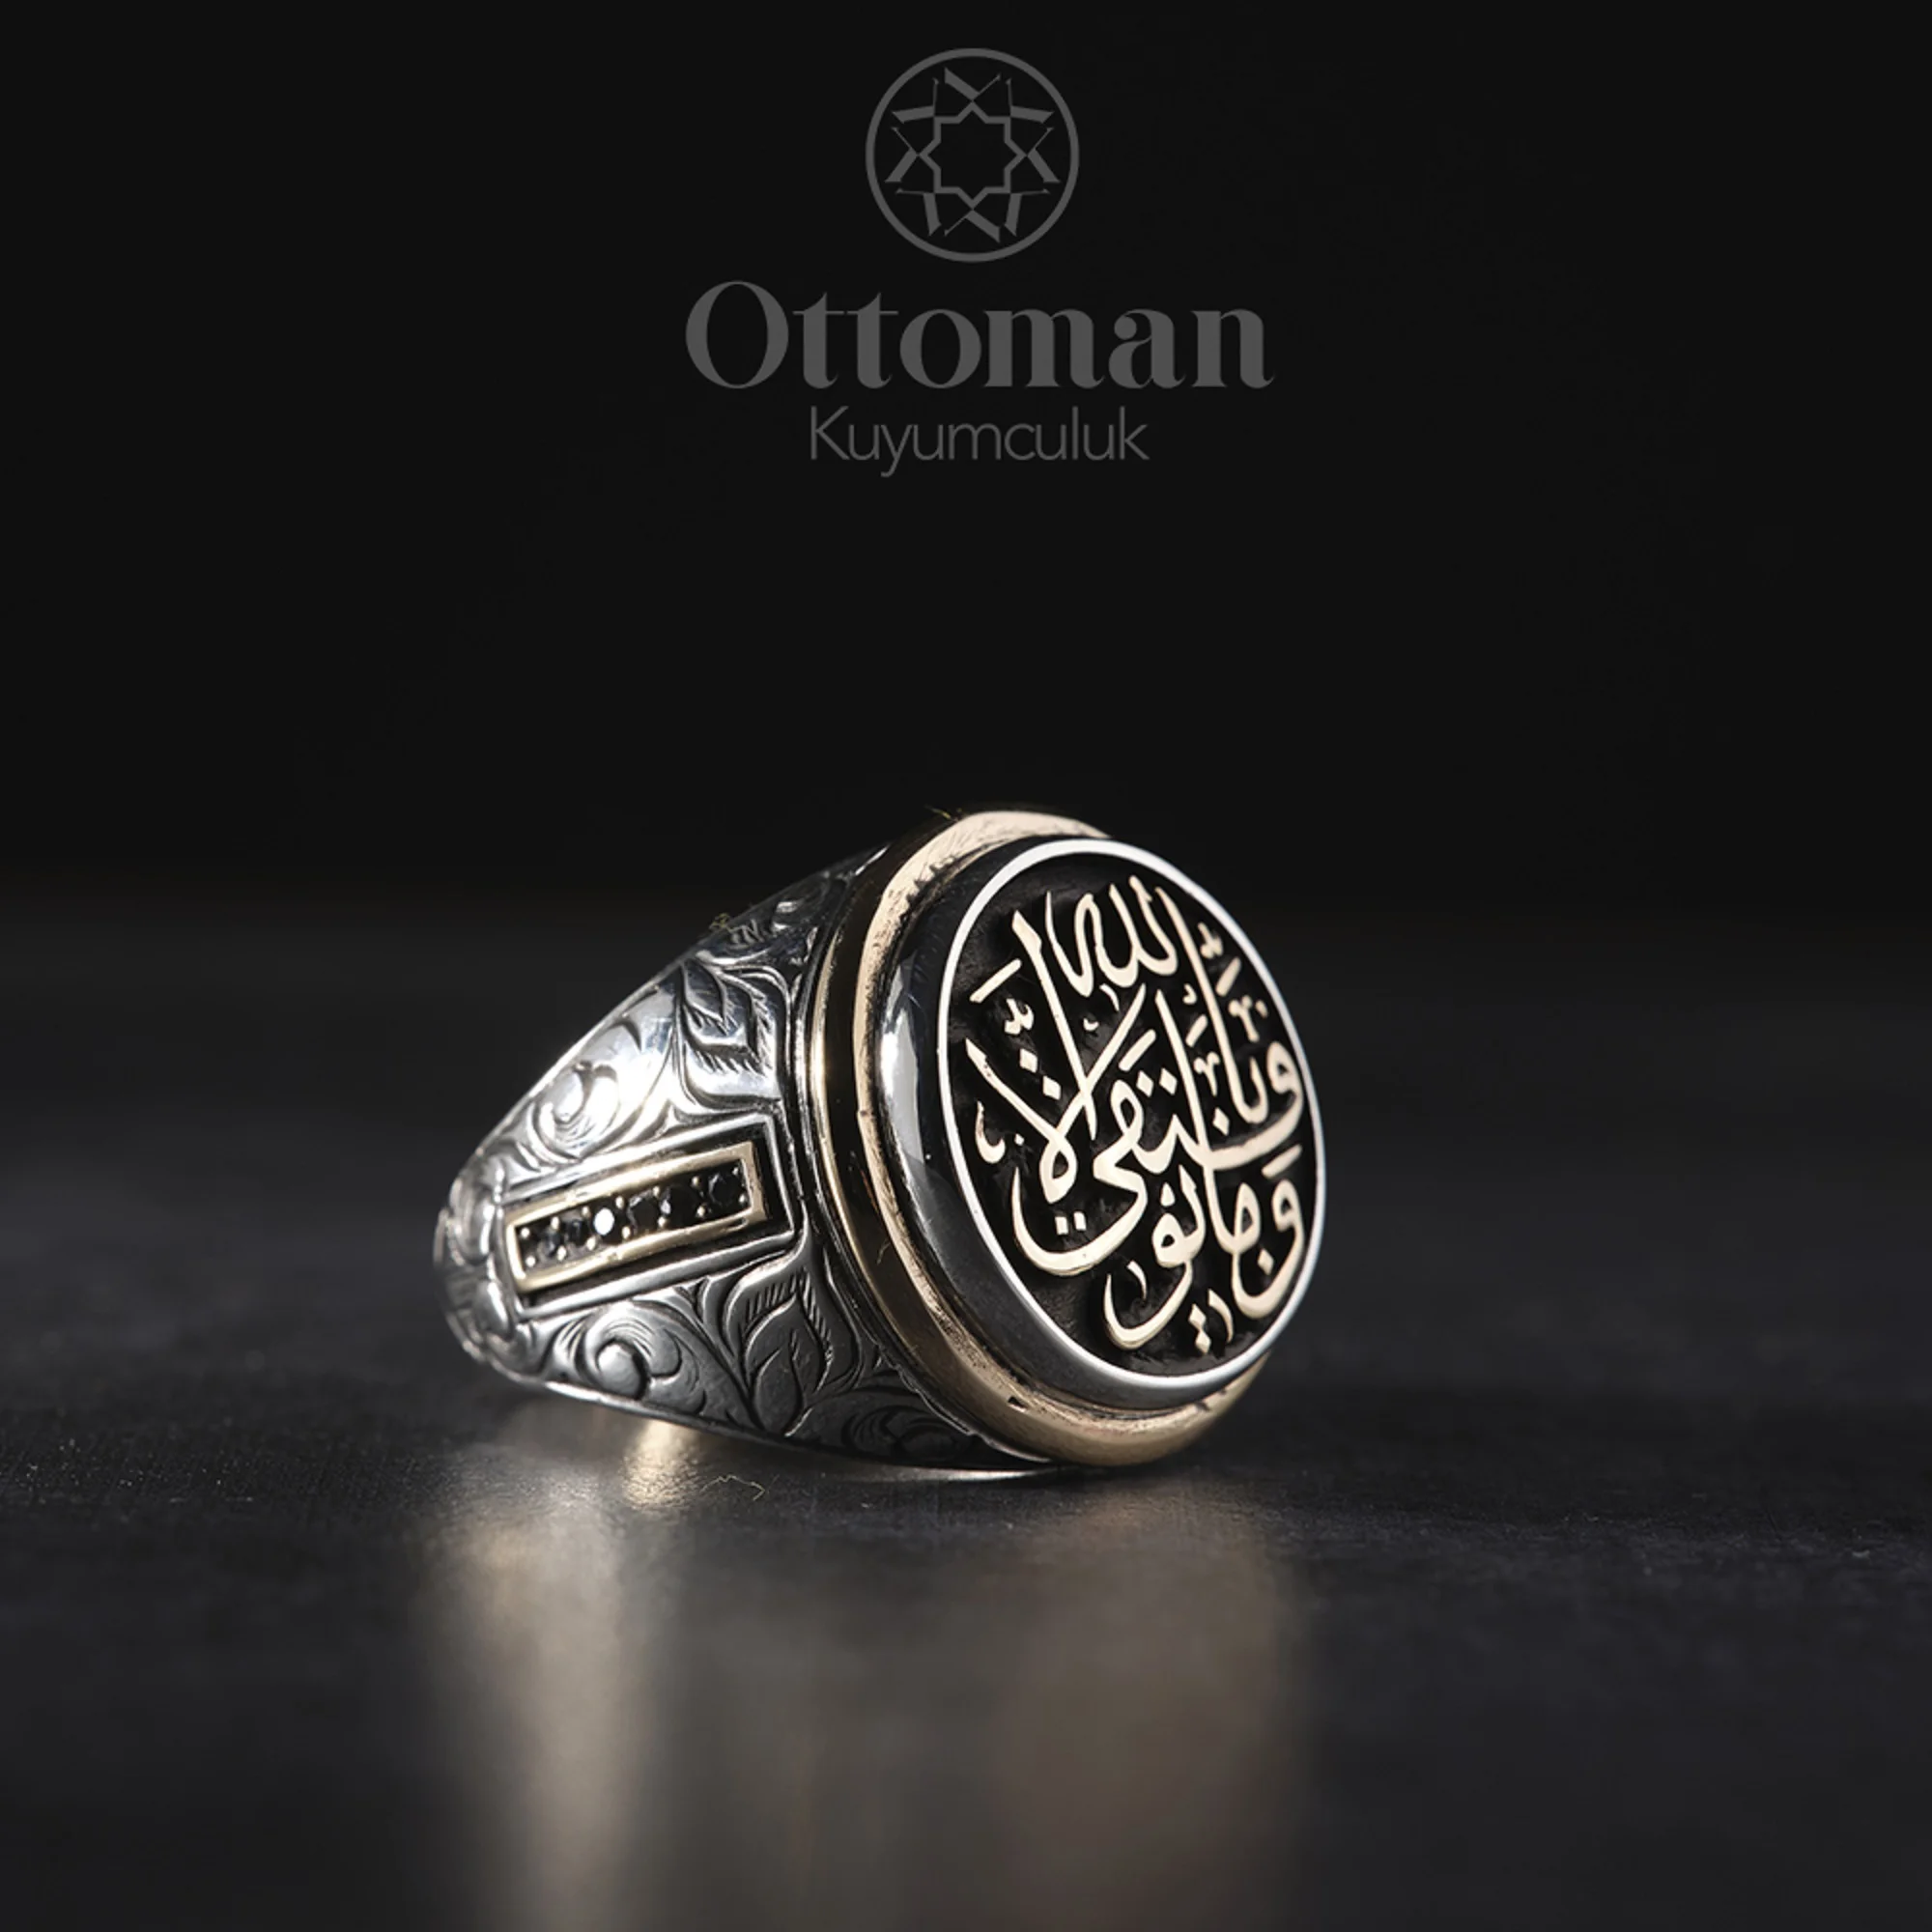 Name Round Black Silver Men's Ring Handmade Adjustable and Customizable Ring Ottoman Motif Ring Name Ring Oval Ring Men's Gift кпб motif серый р сем 4 нав